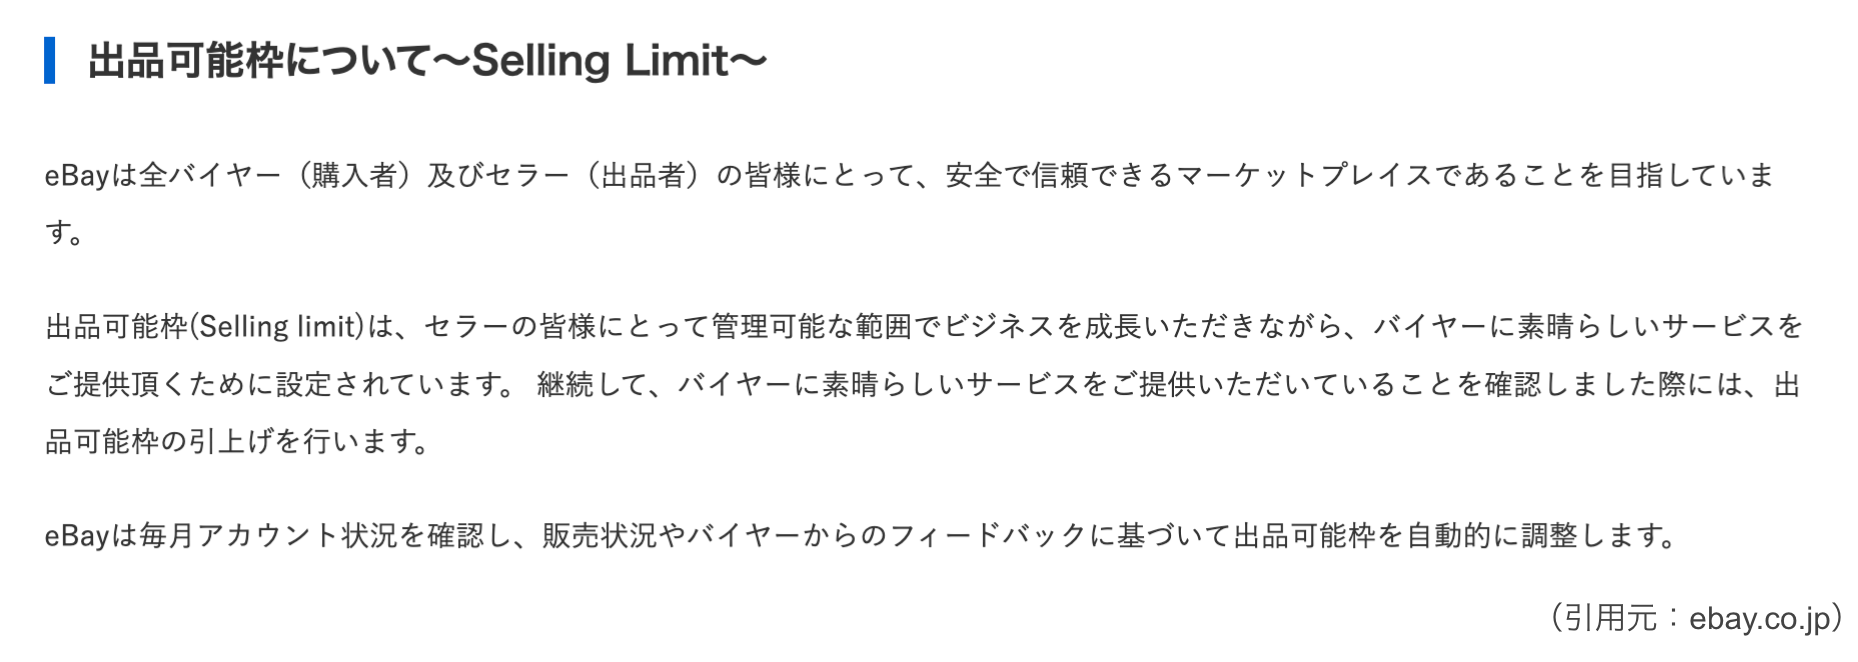 ebay.co.jp:セリングリミットについて